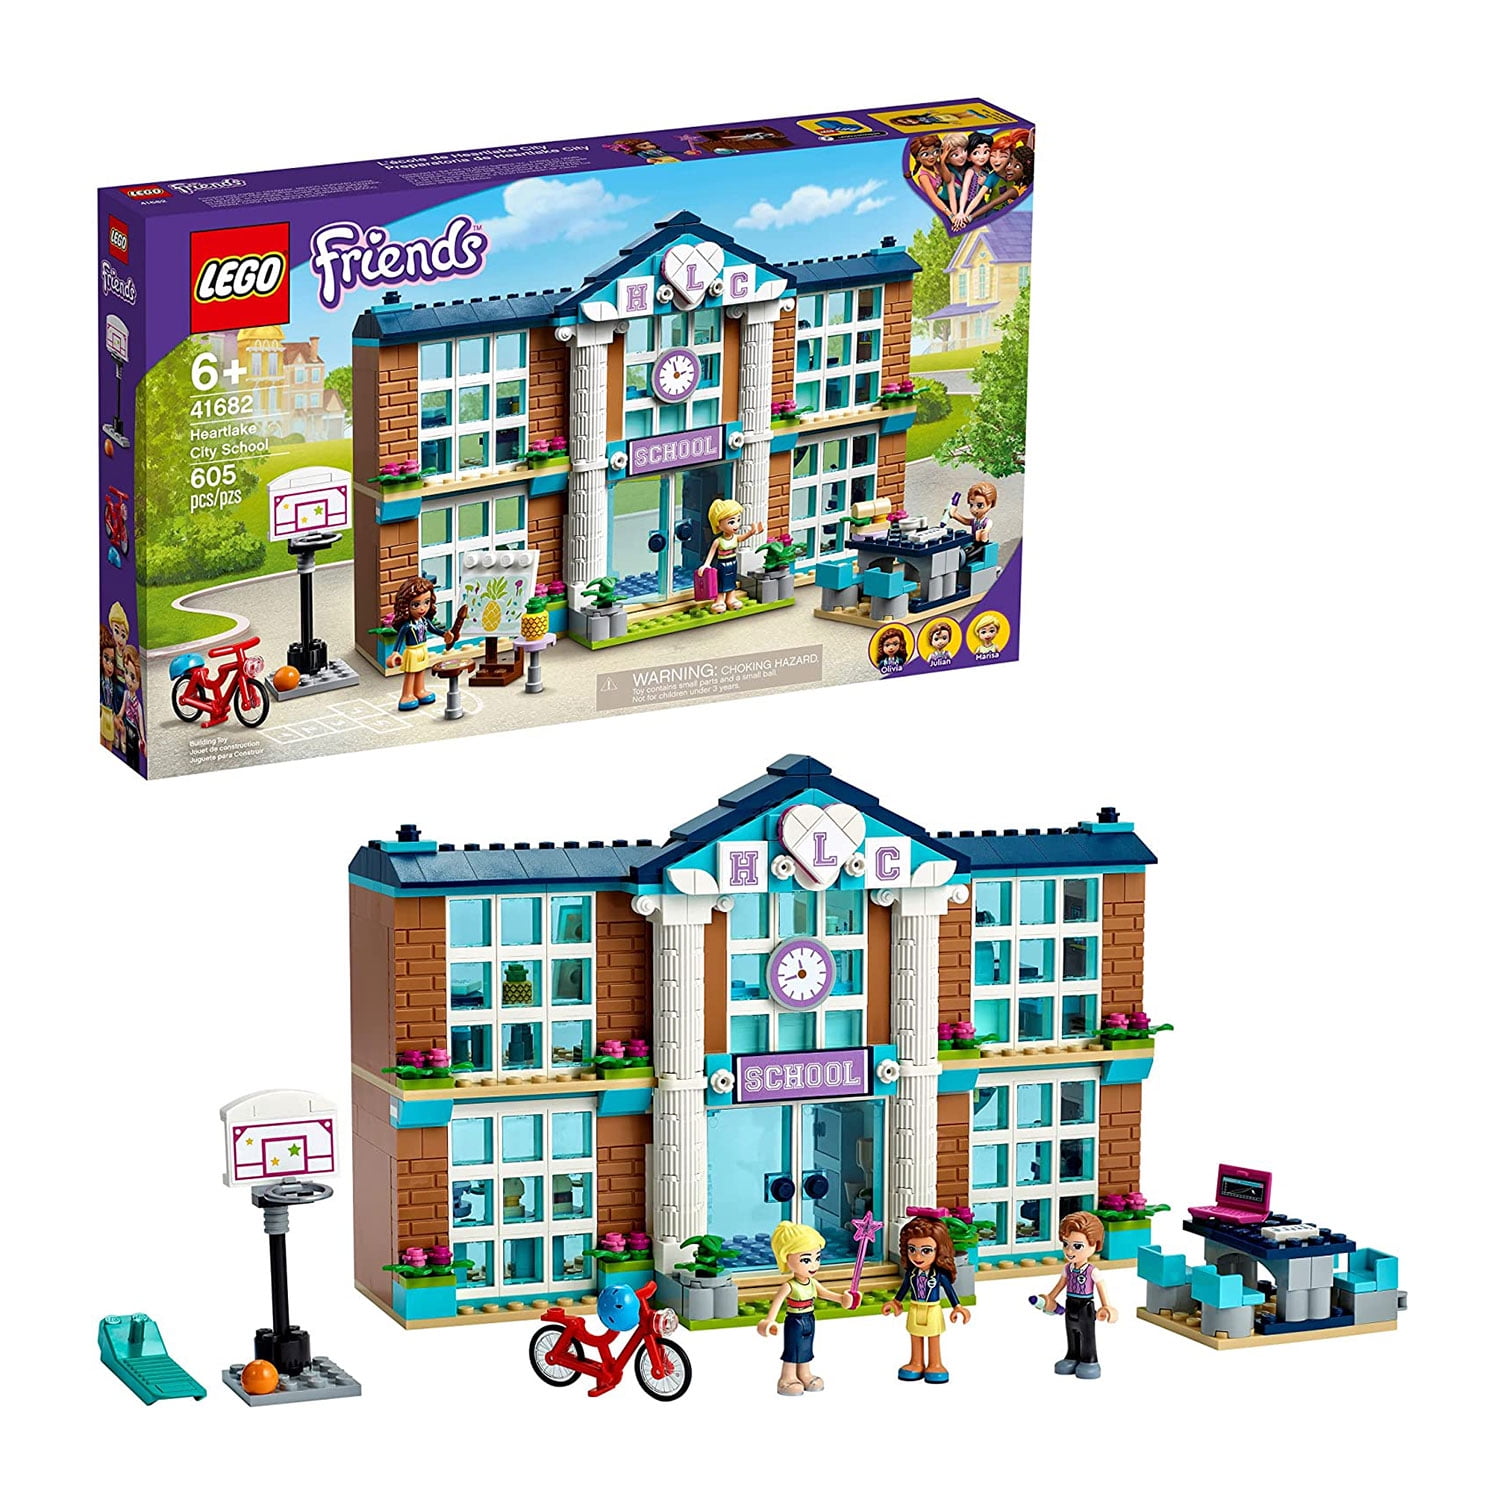 Måling Optage Valnød LEGO Friends Heartlake City School 41682 Building Toy for Creative Play  (605 Pieces) - Walmart.com